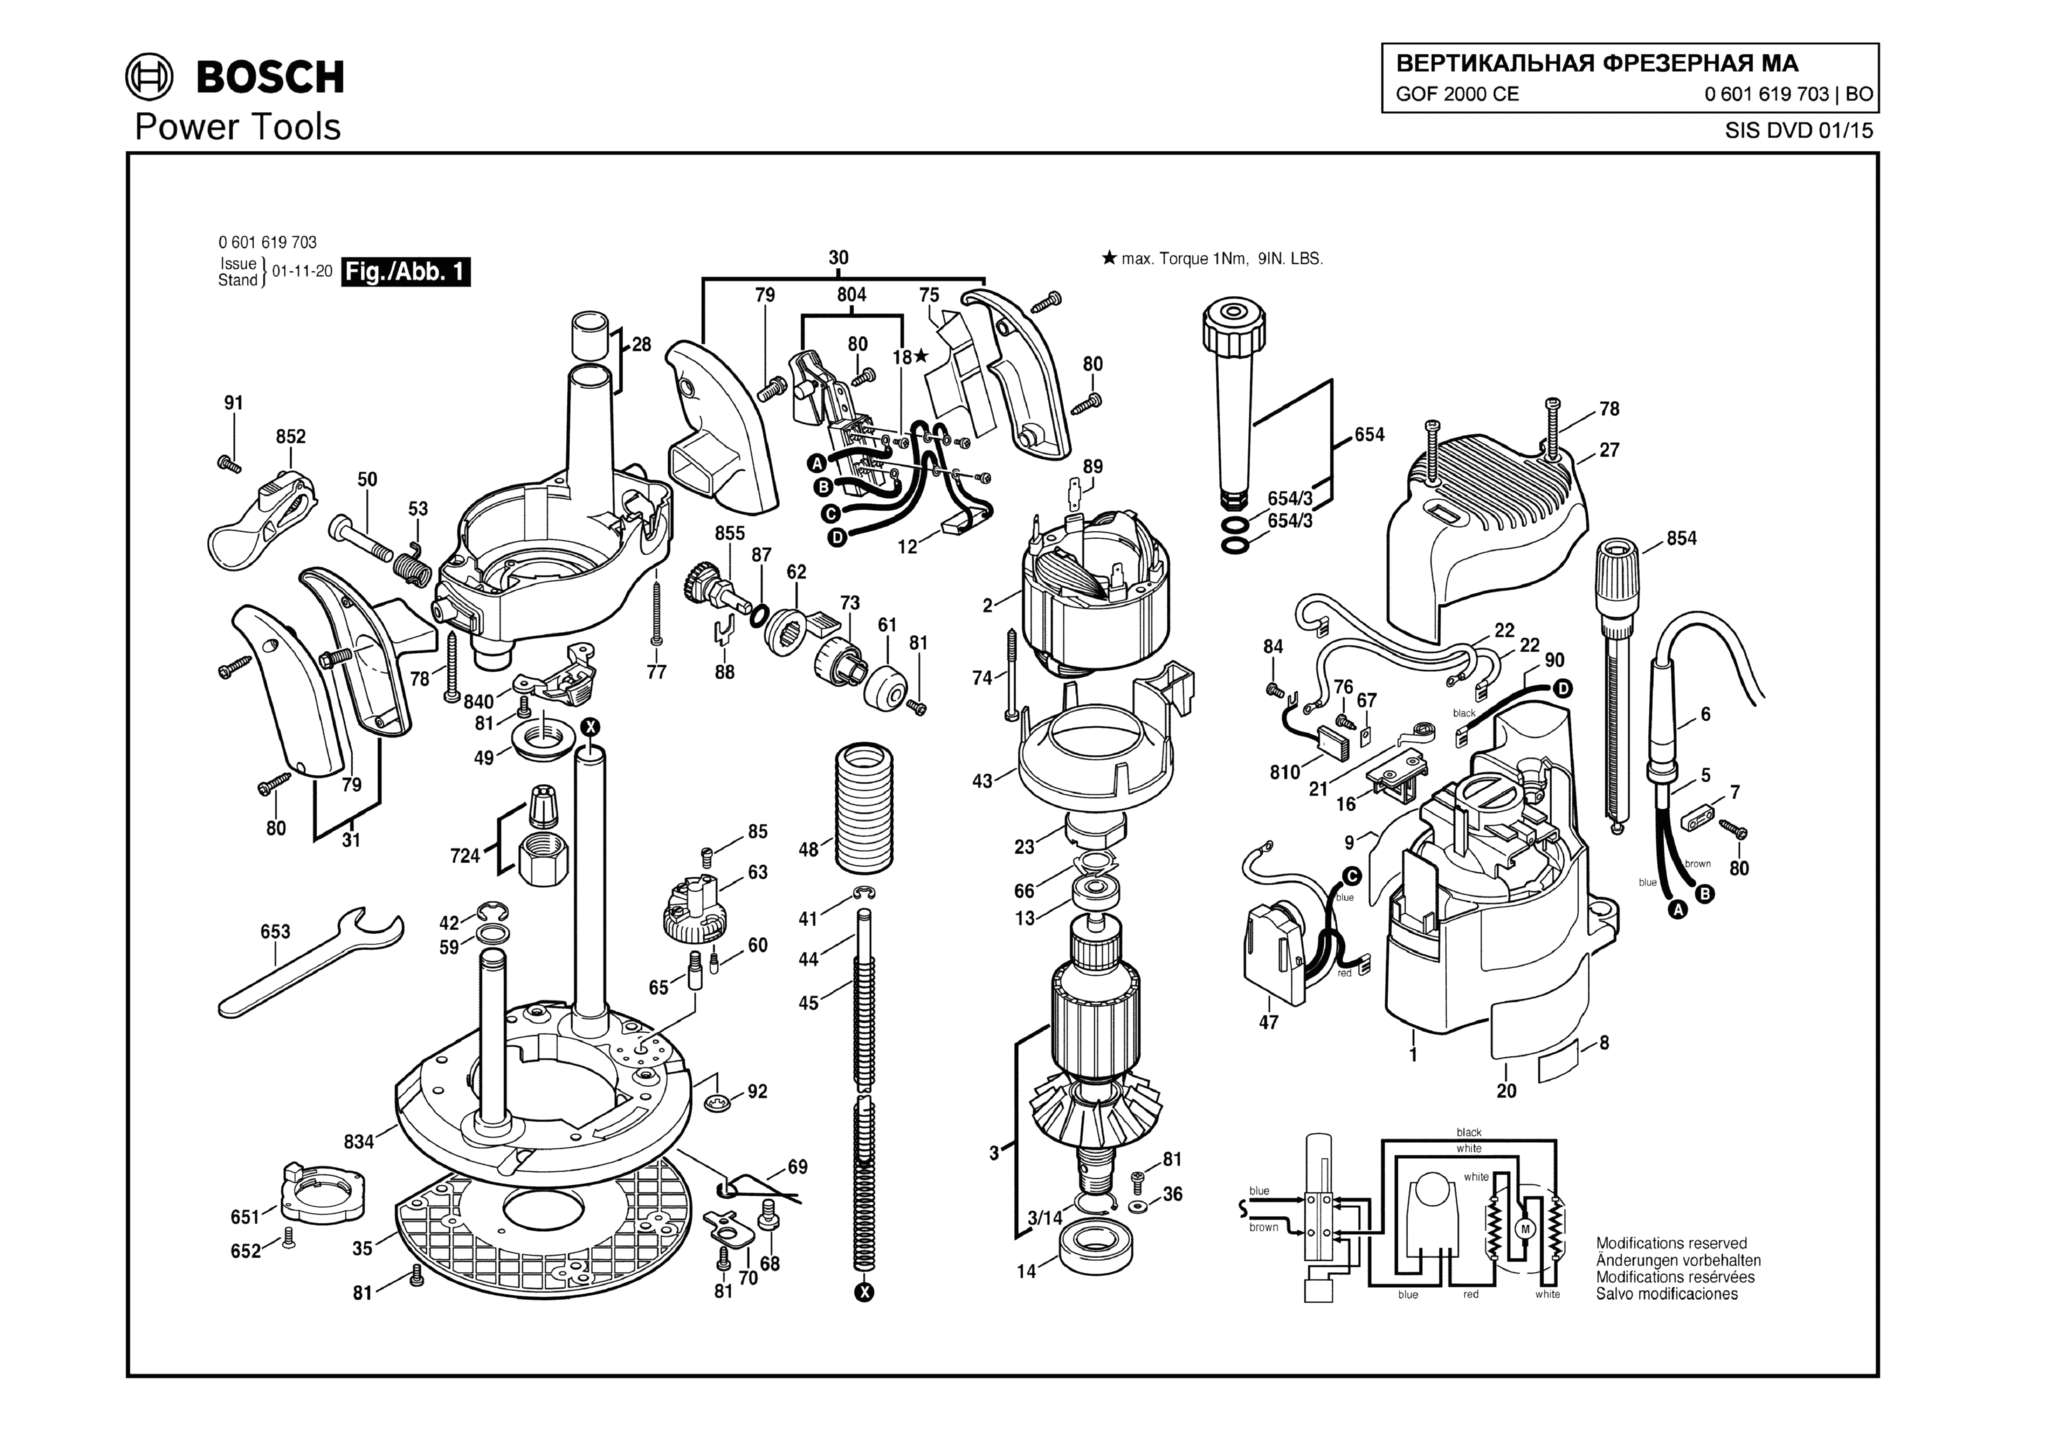 Запчасти, схема и деталировка Bosch GOF 2000 CE (ТИП 0601619703)